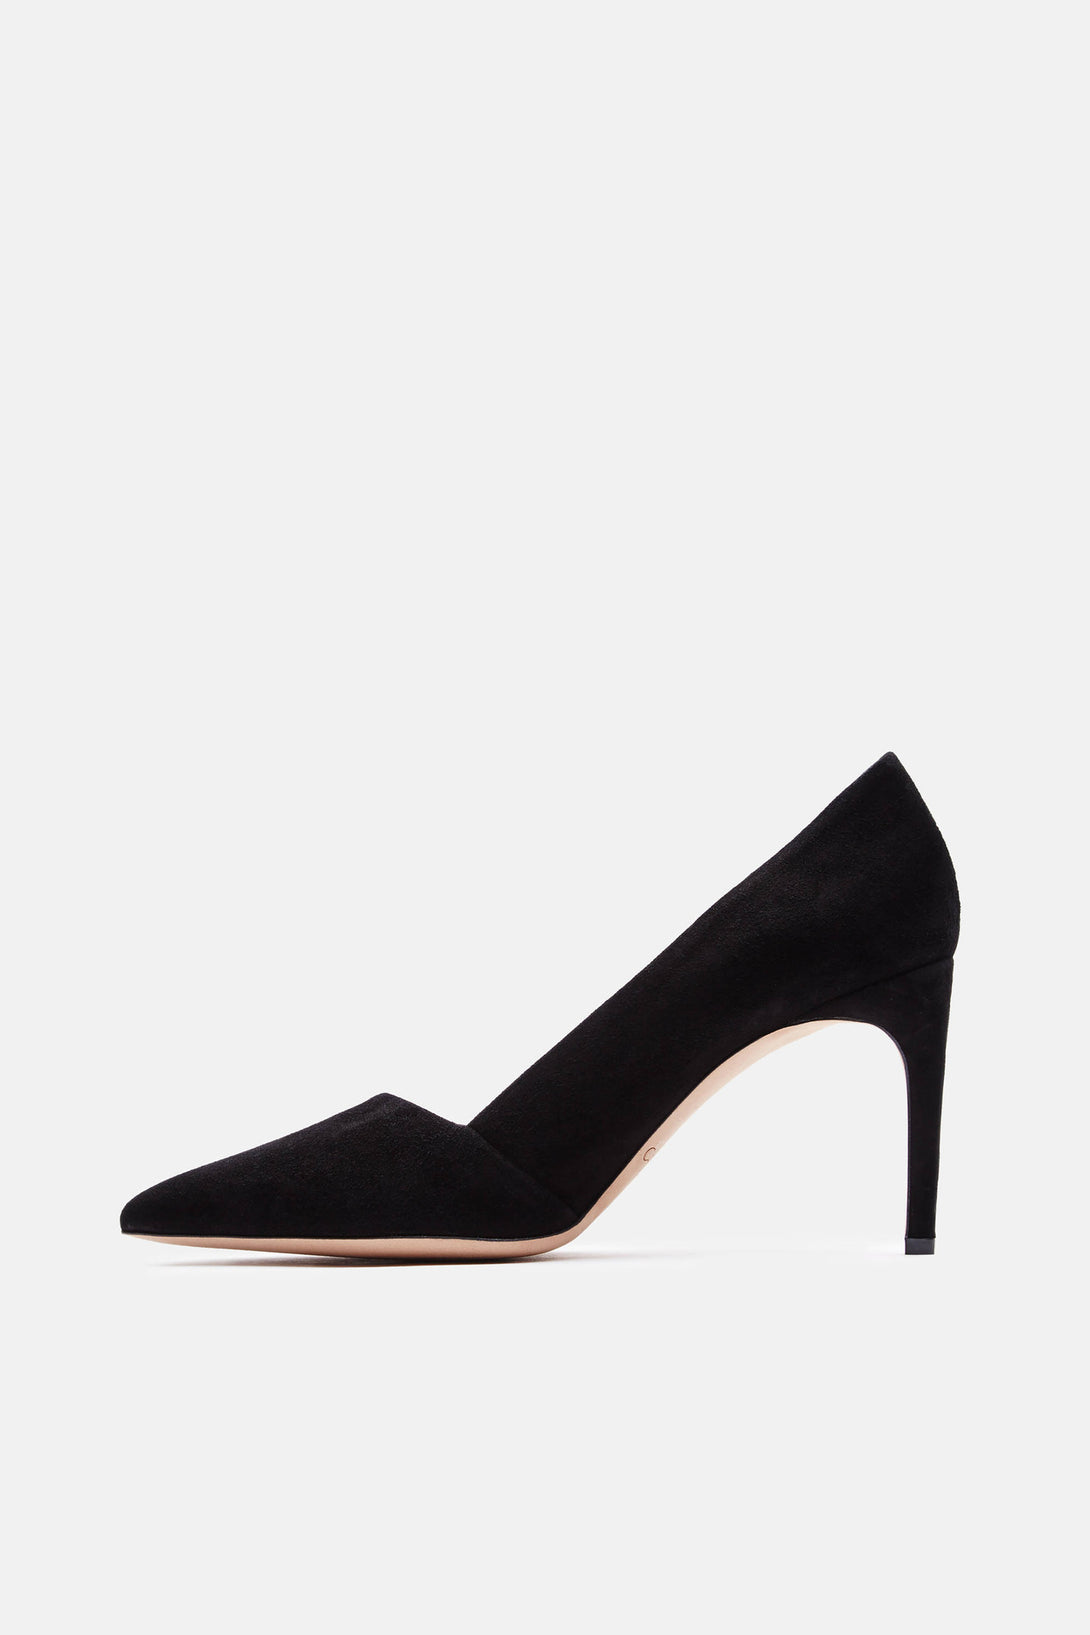 Belle 85mm Heels - Black – The Line